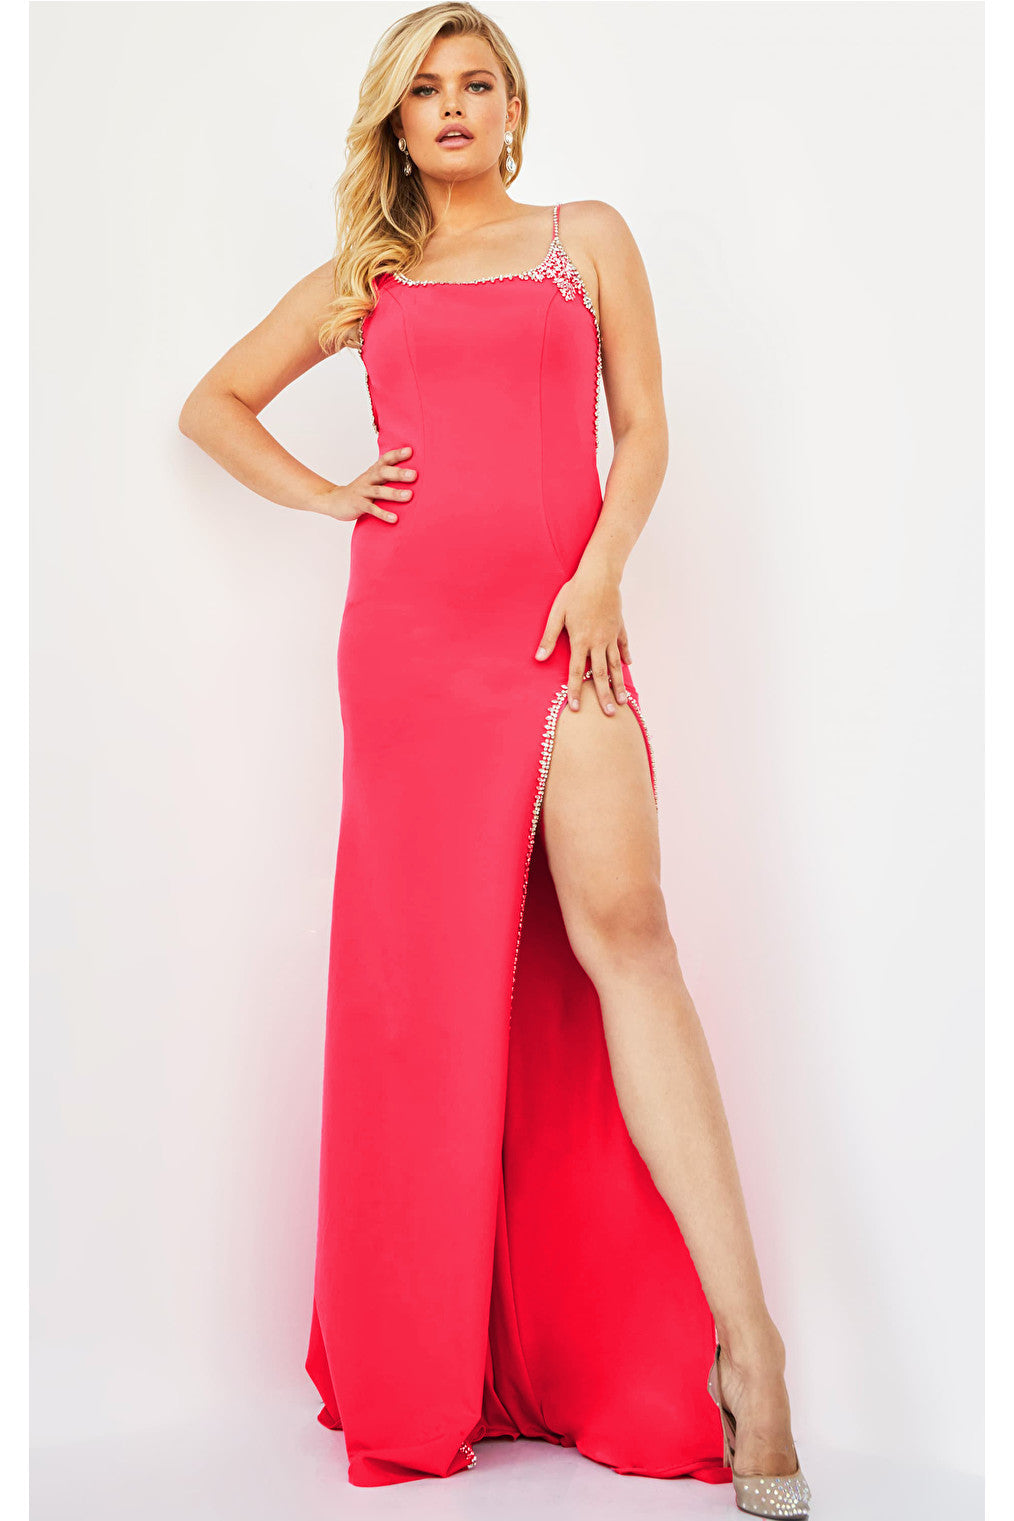 pink curvy dress 09116